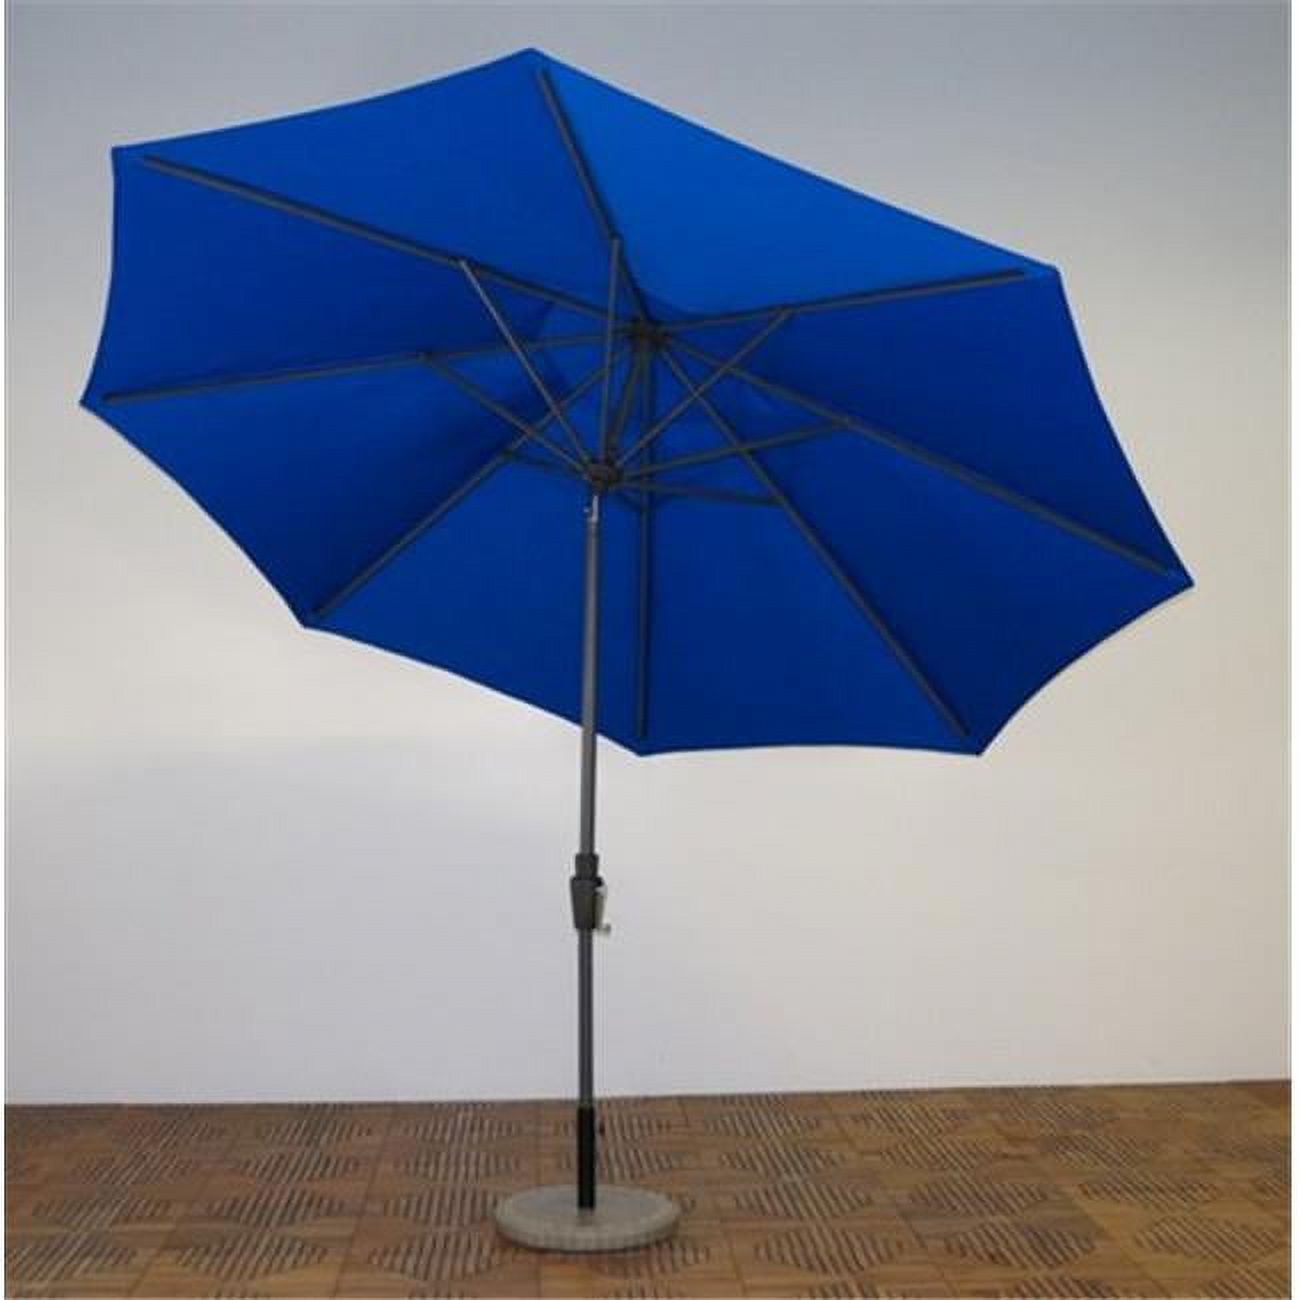 Shade Trends UM11-DU-102 11 ft. x 8 Premium Market Umbrella- Durango Frame- Pacific Blue Canopy - image 1 of 1